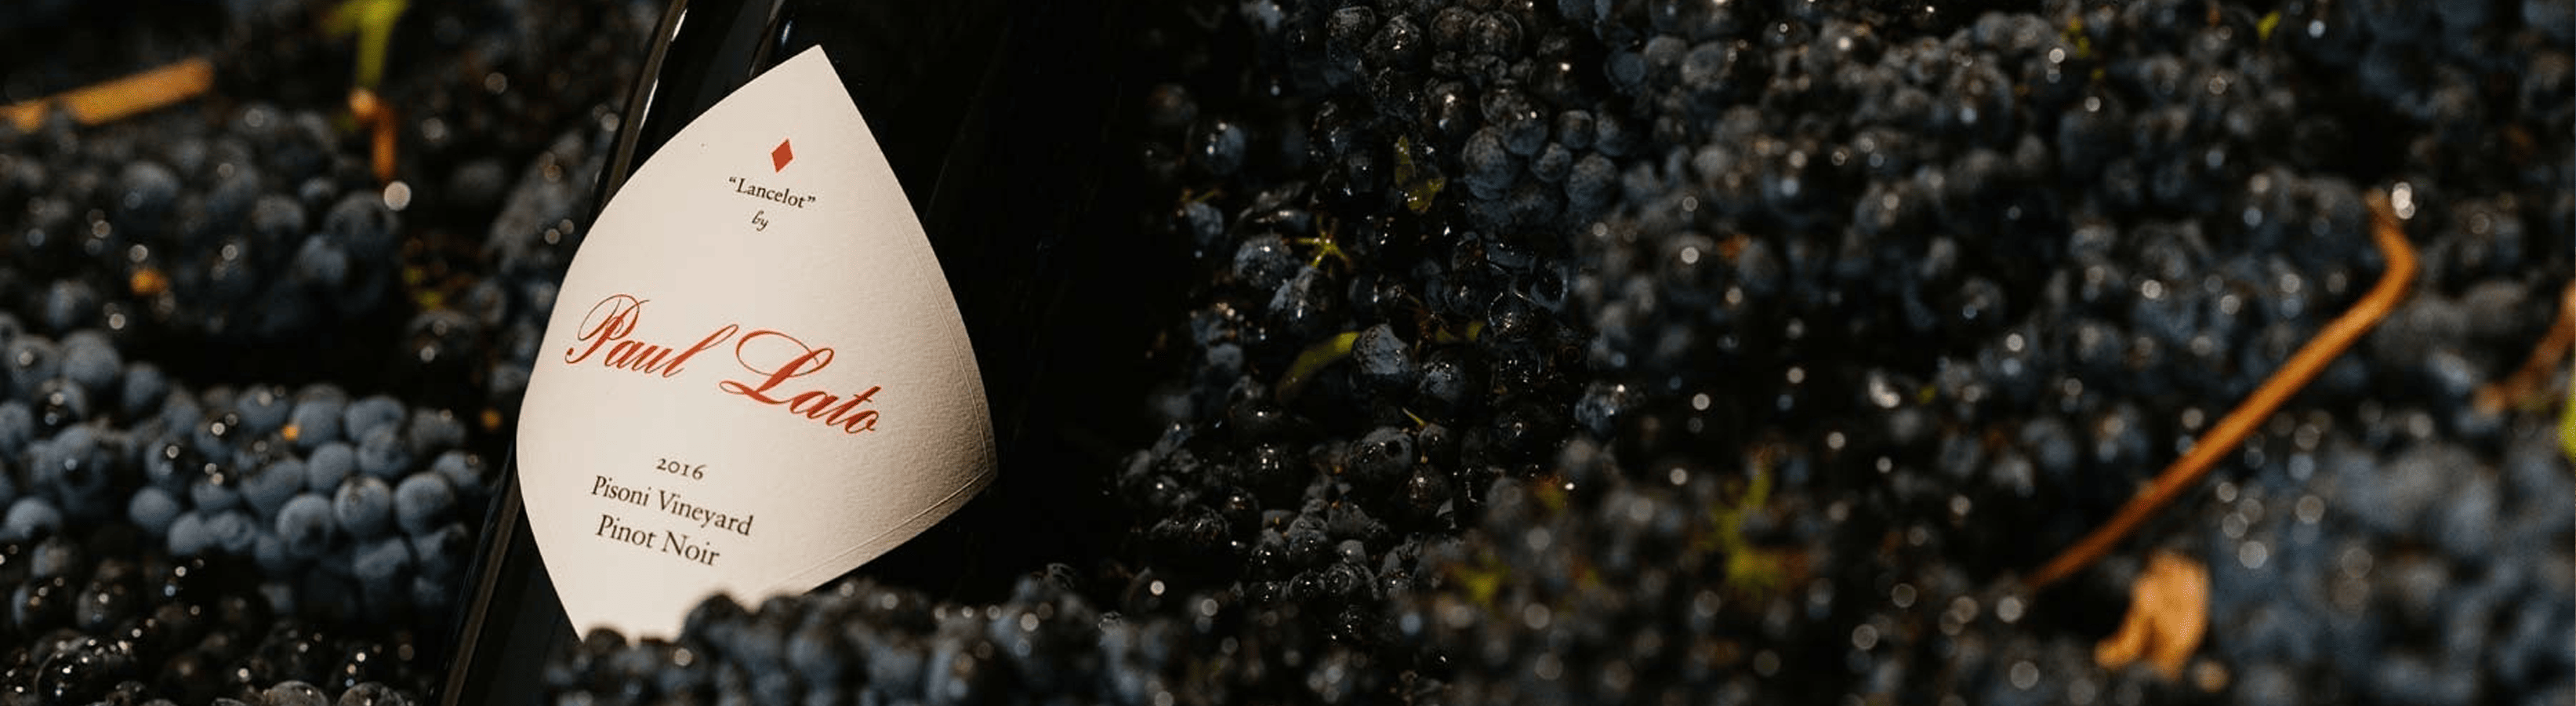 paul lato winery